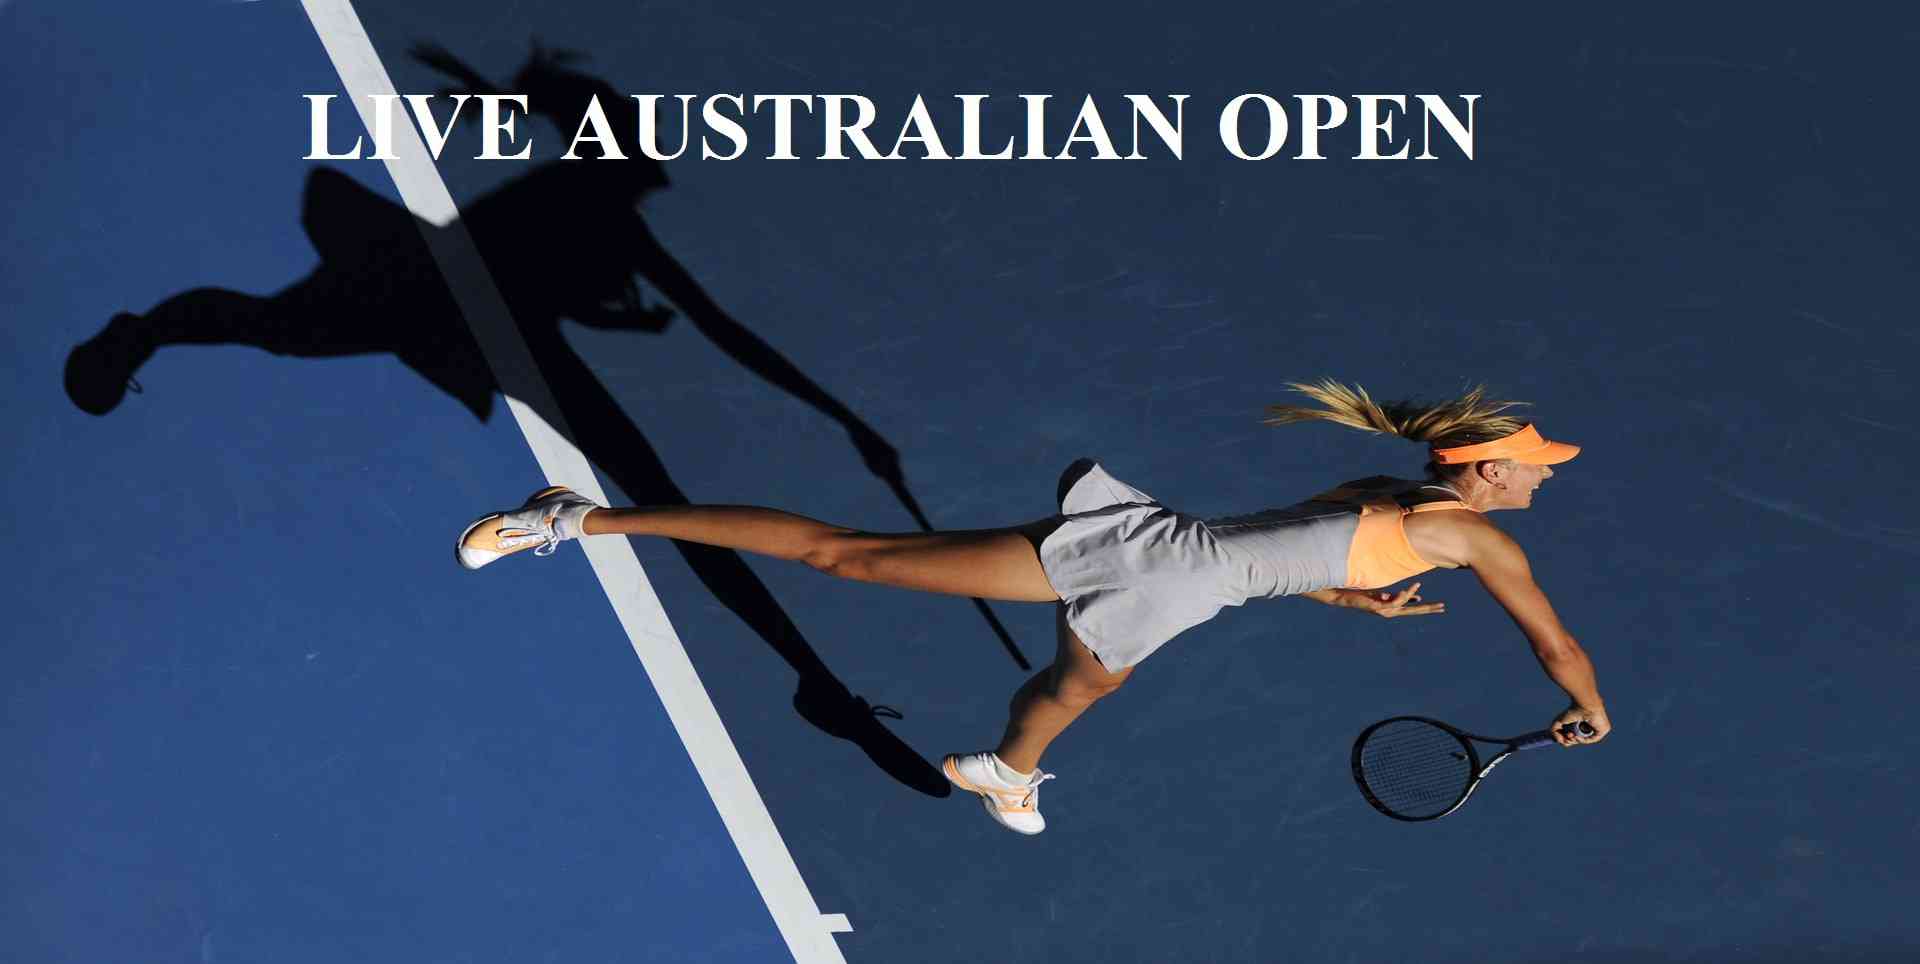 2017 Australian Open final live